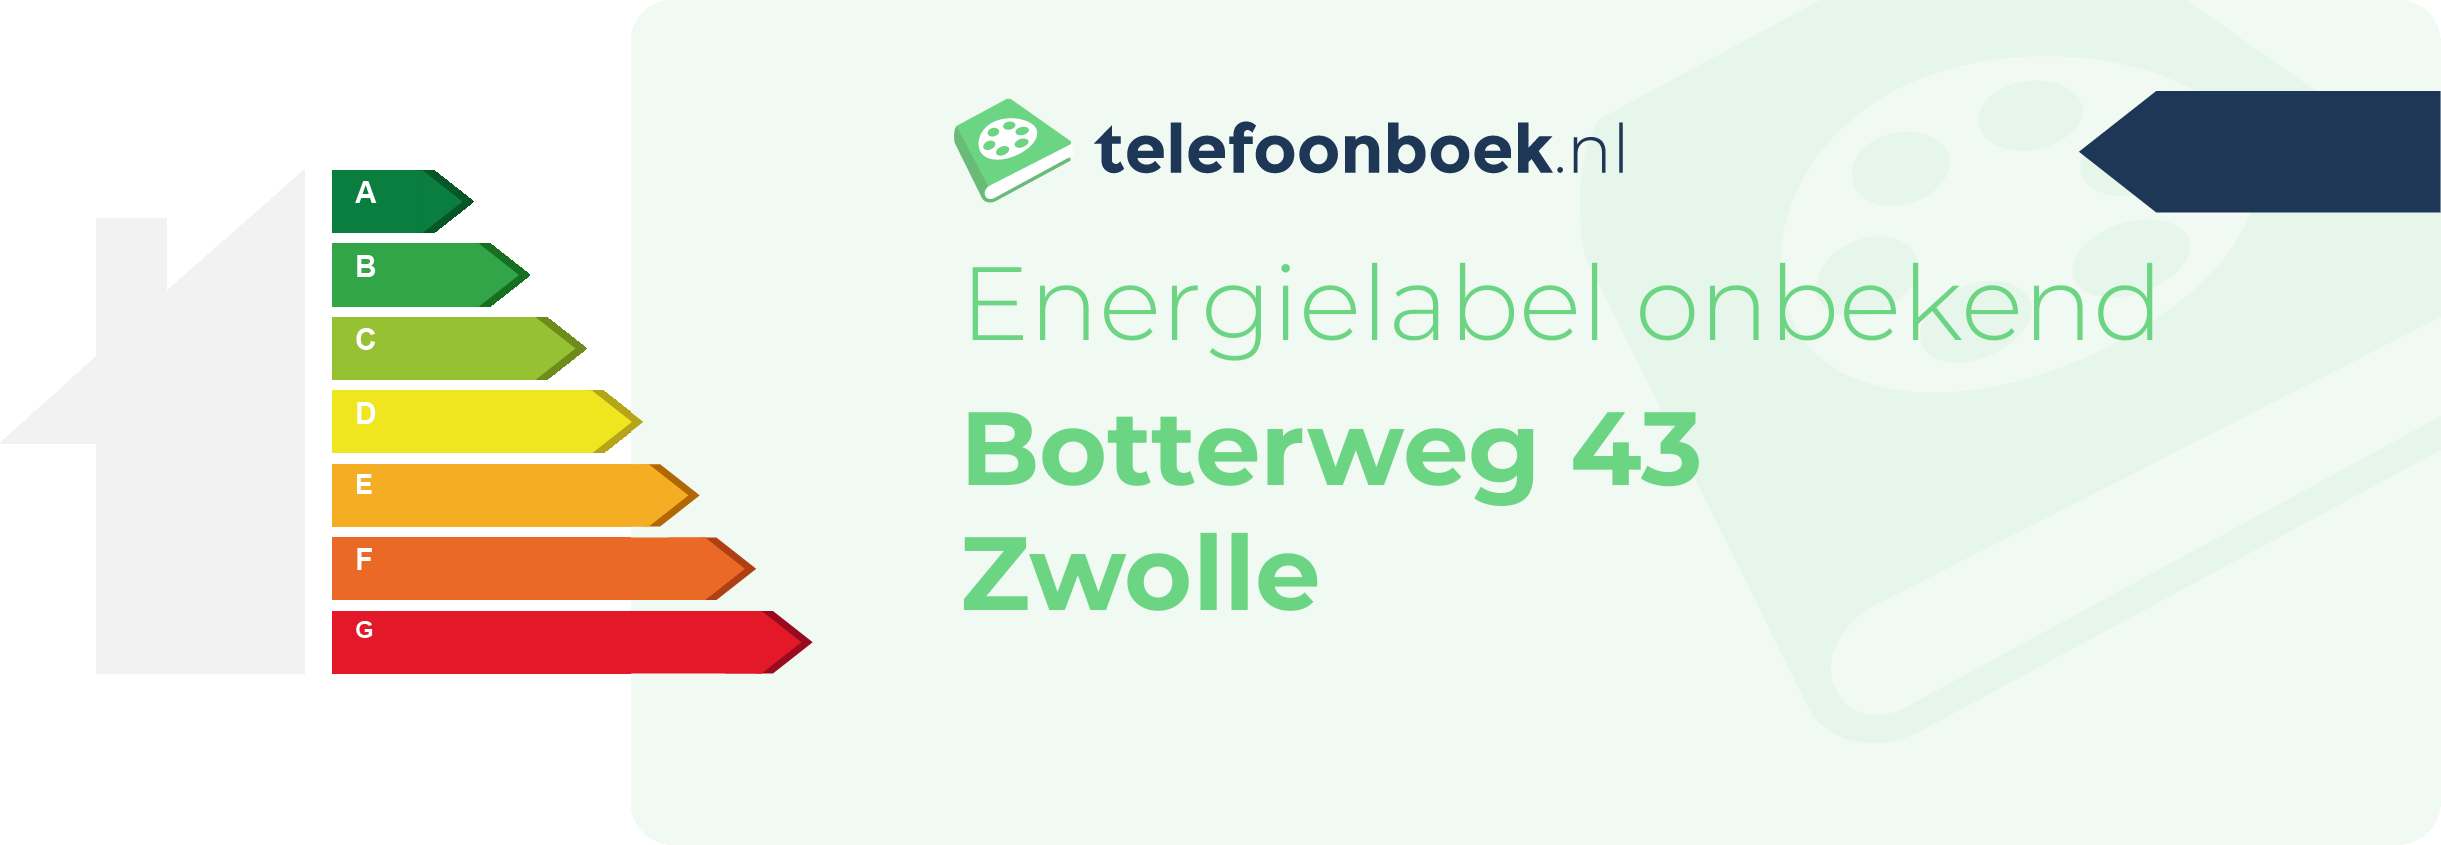 Energielabel Botterweg 43 Zwolle